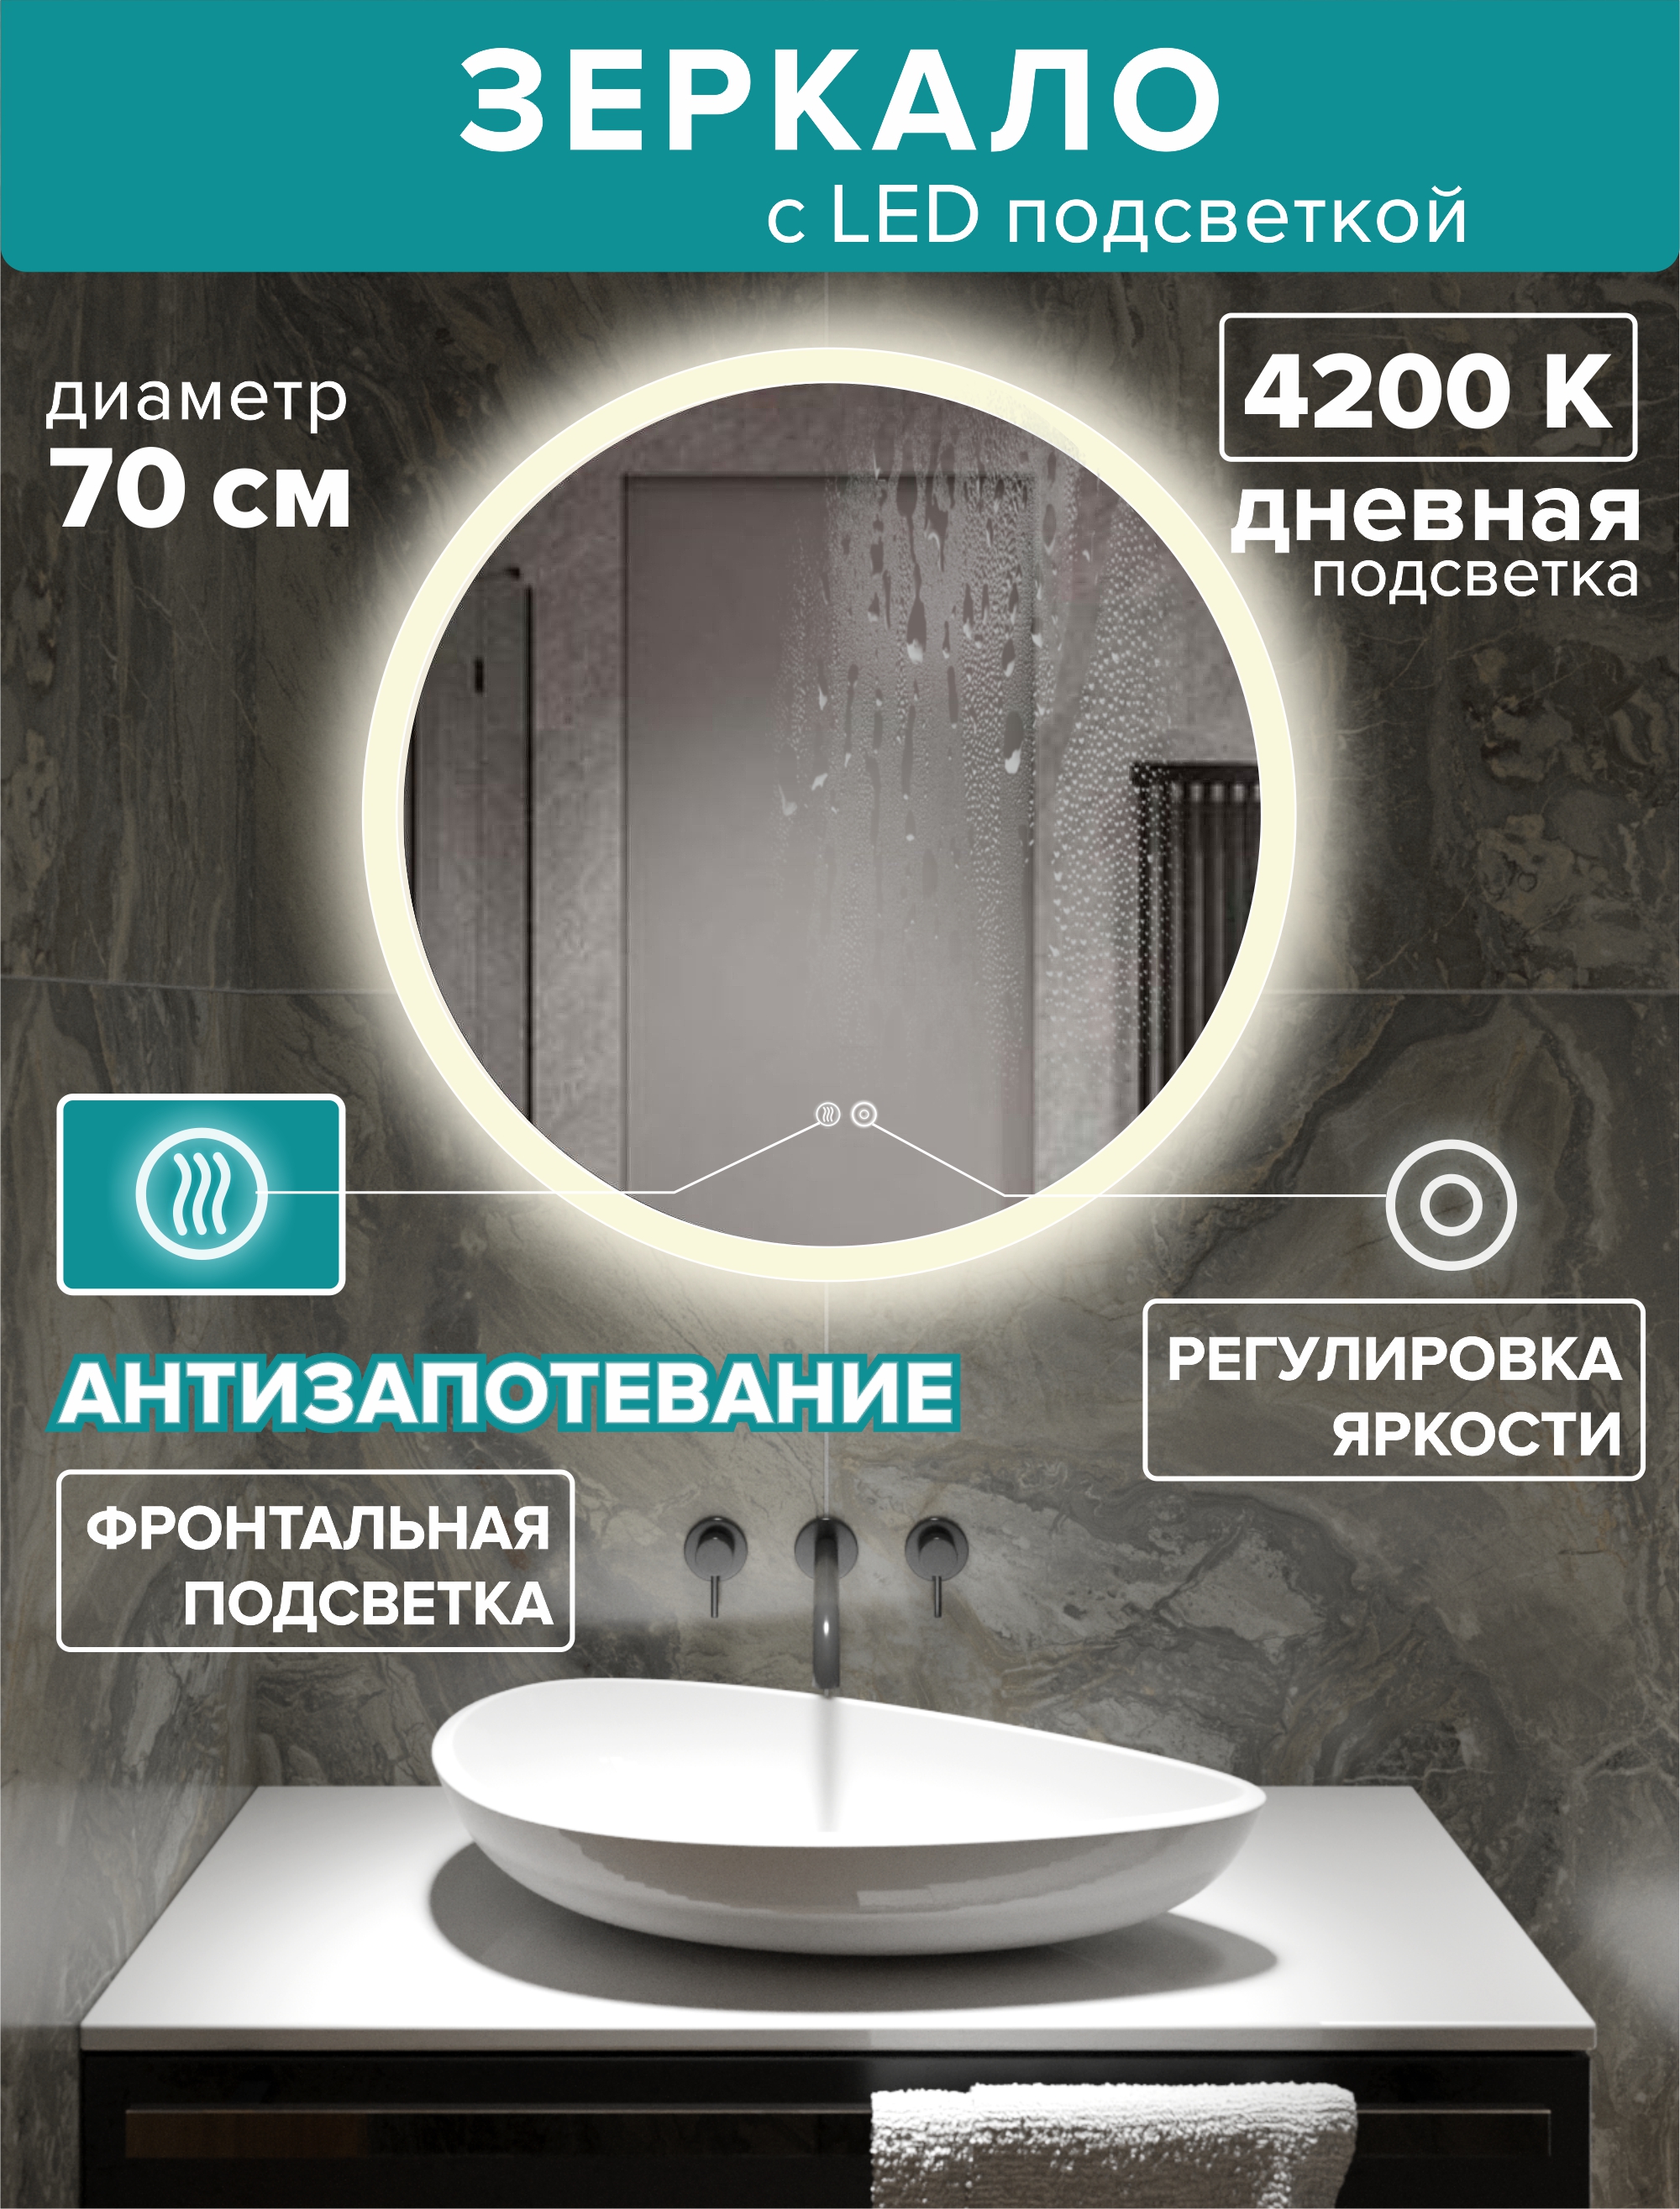 Зеркало для ванной Alfa Mirrors дневная подсветка 4200К, круглое 70см, подогрев, MSvet-7Ad блюдо kulsan white granite круглое 20 см